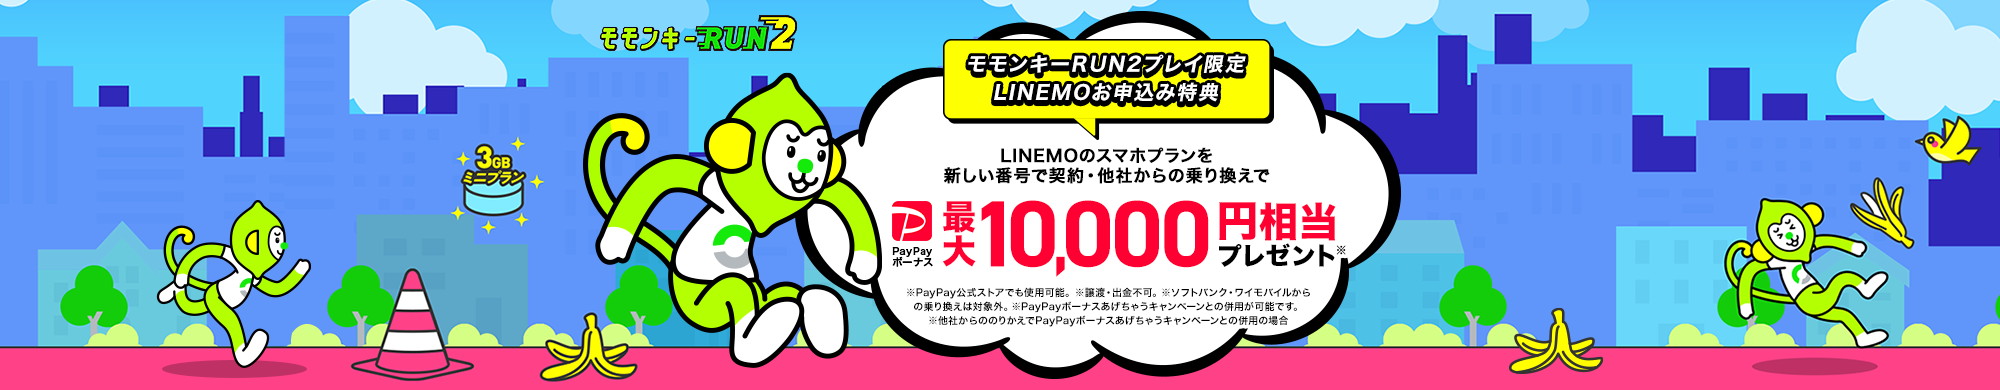 LINEMOのスマホプランを新しい番号で契約・他社からの乗り換えで、PayPayボーナス最大10,000円相当プレゼント